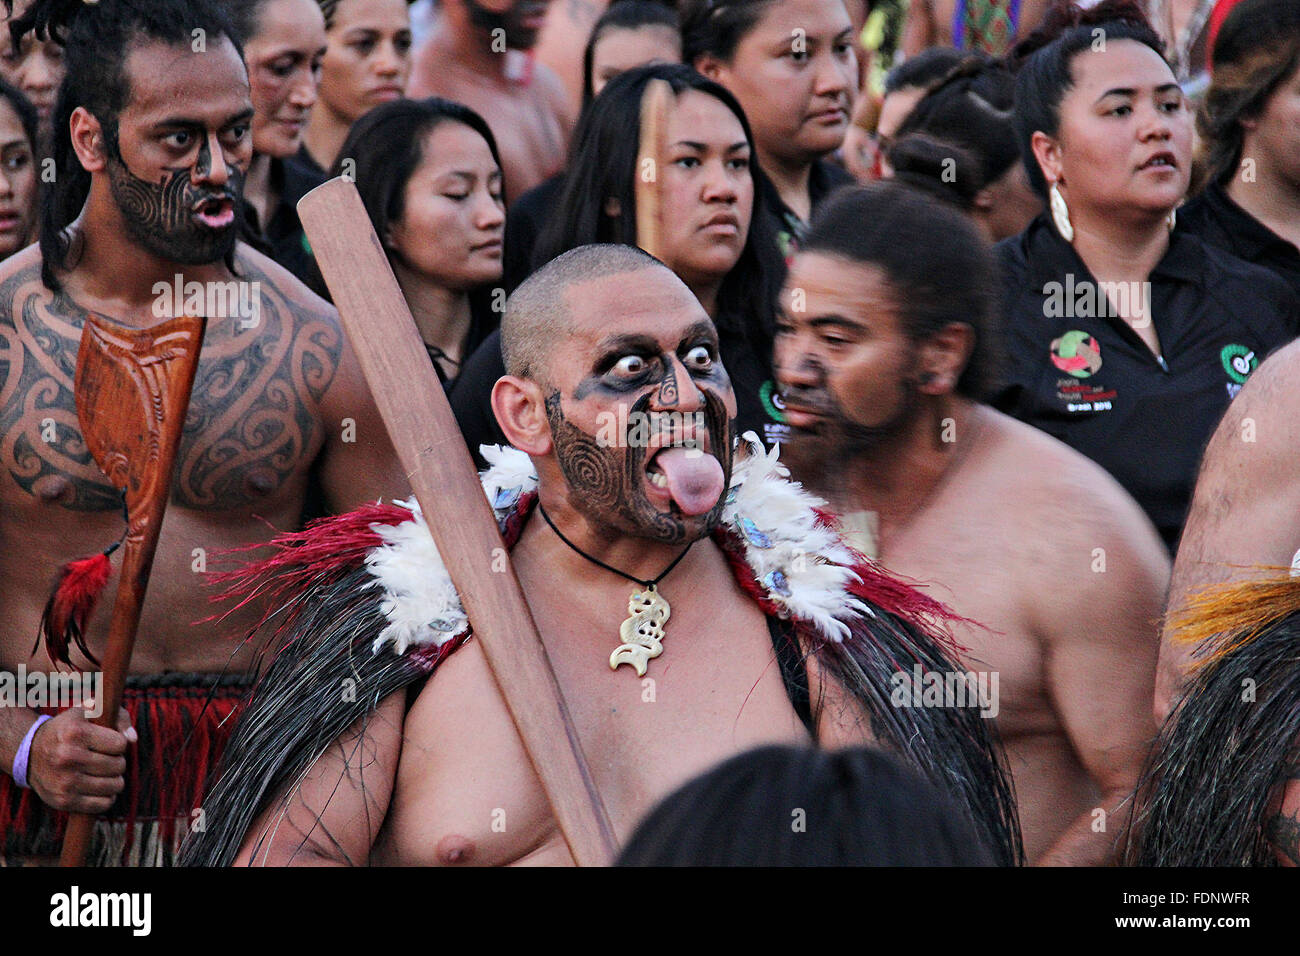 Nz maori women wet and naked